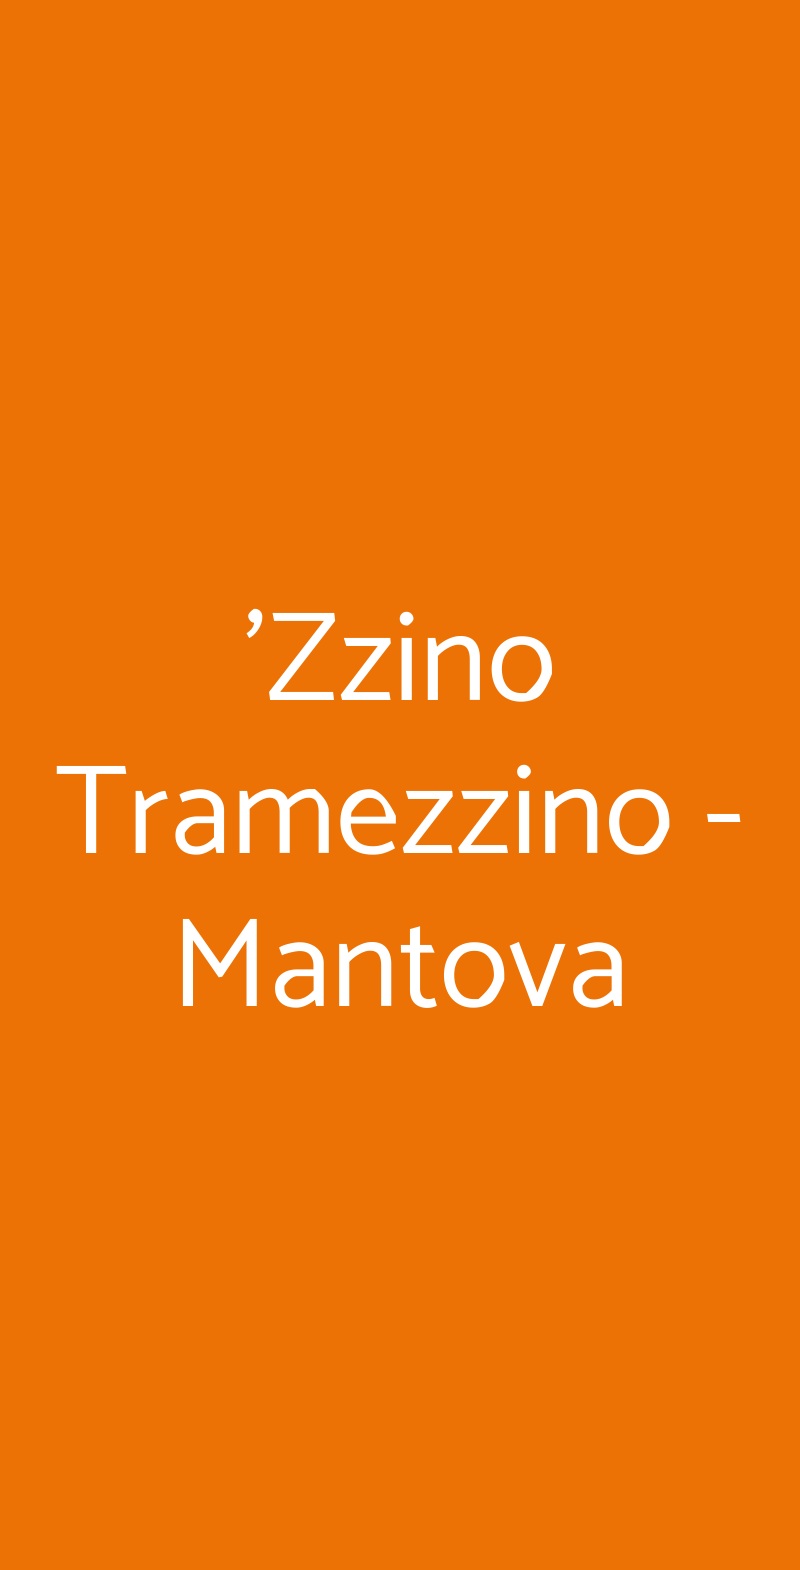 'Zzino Tramezzino - Mantova Mantova menù 1 pagina